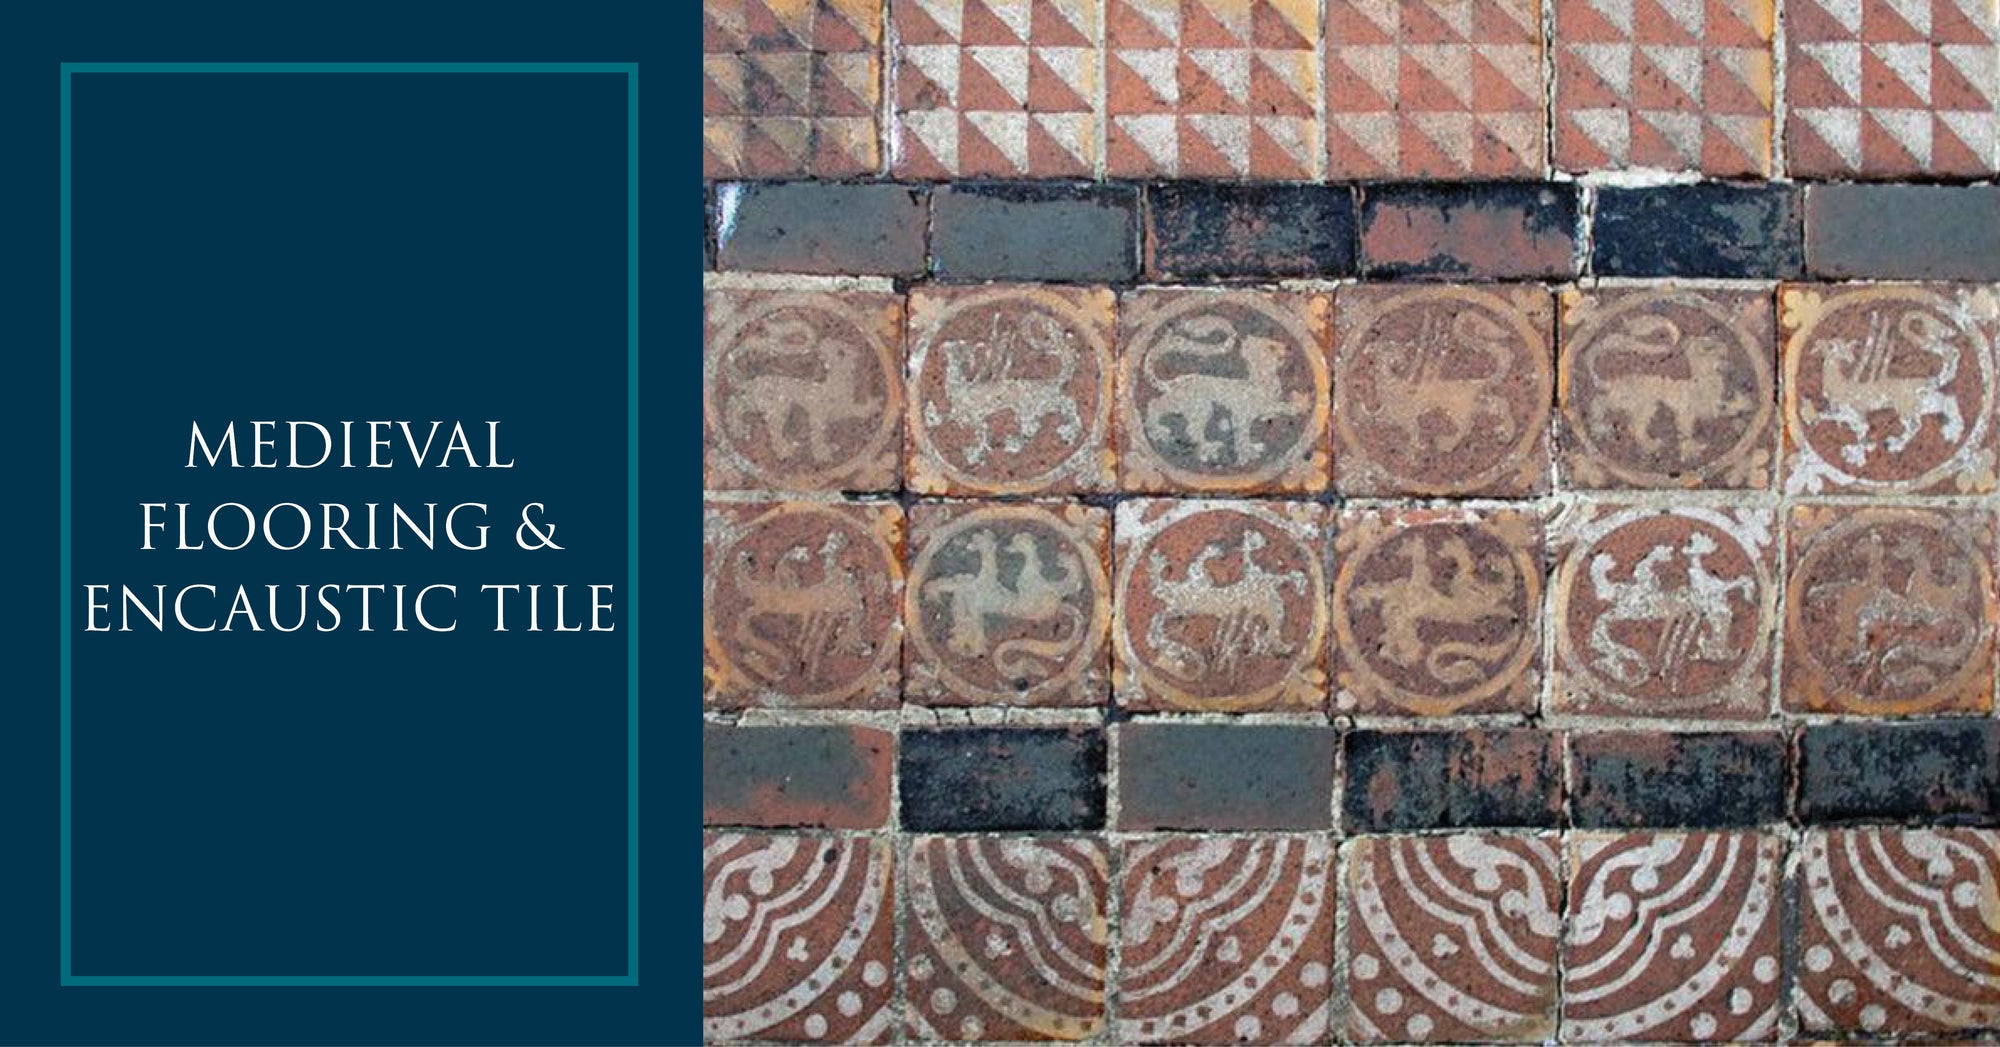 Medieval Flooring & Encaustic Tile - Architessa